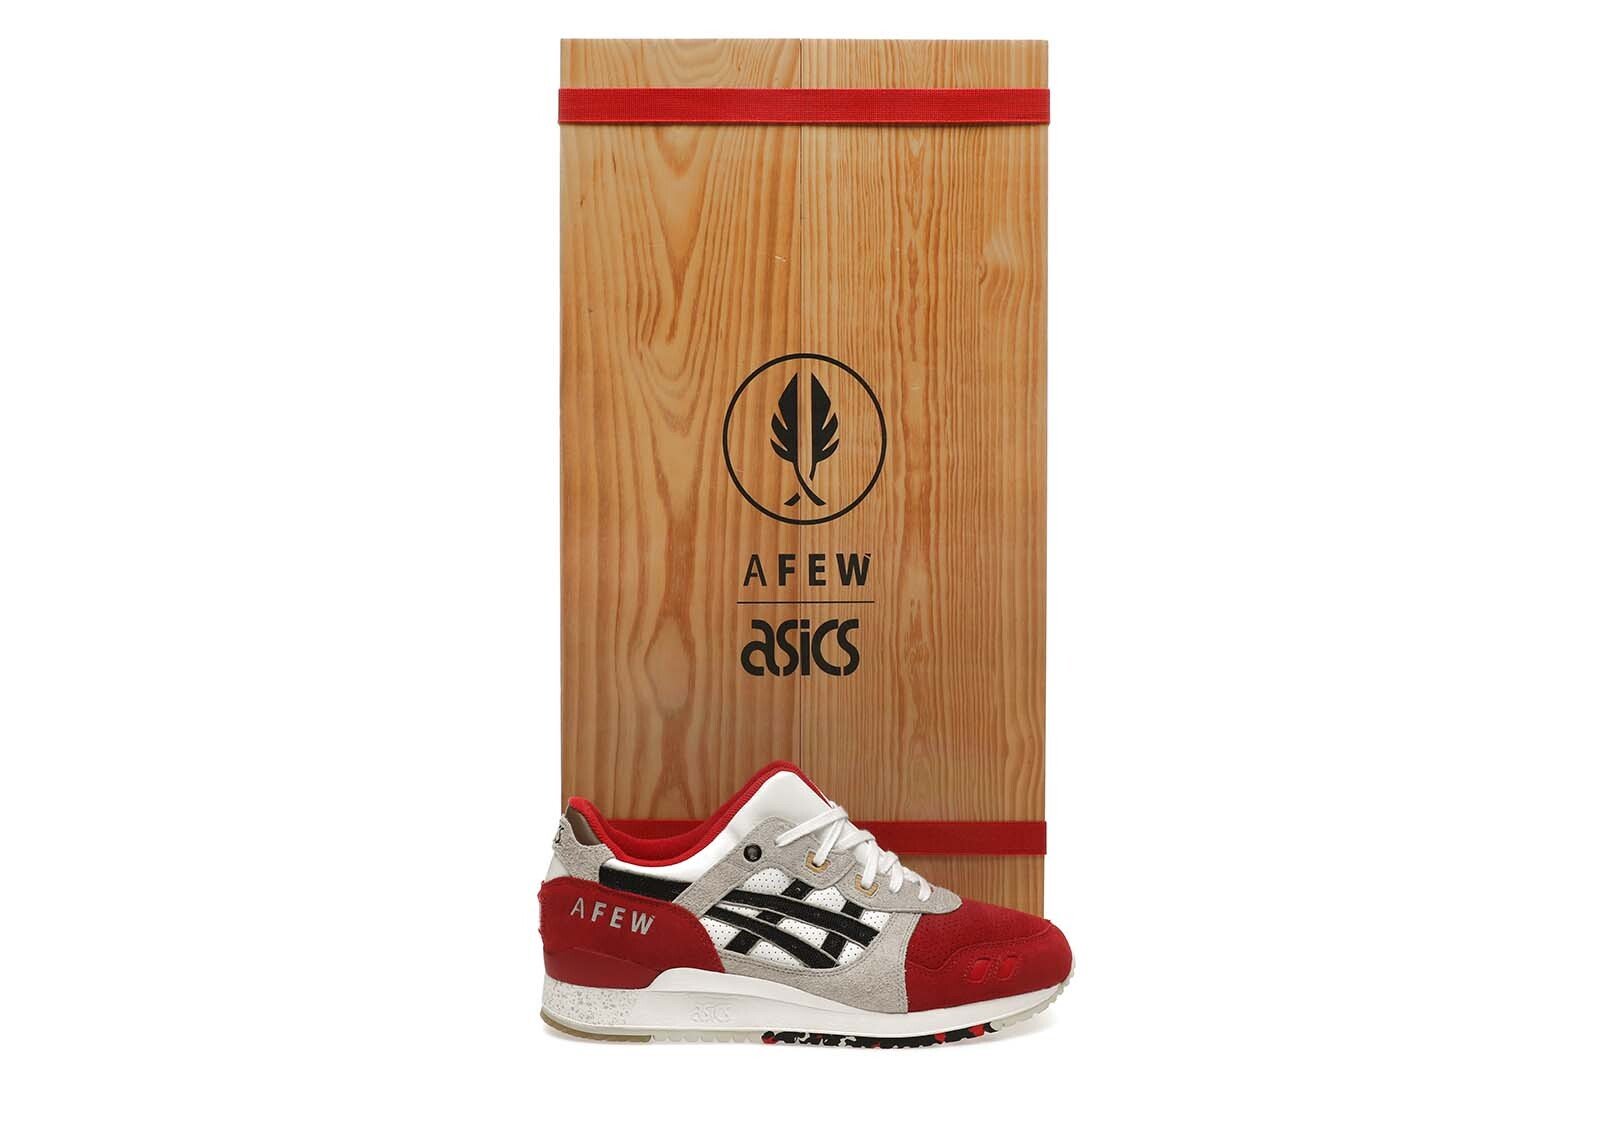 ASICS Gel-Lyte III AFEW Koi (Special Box) sneakers